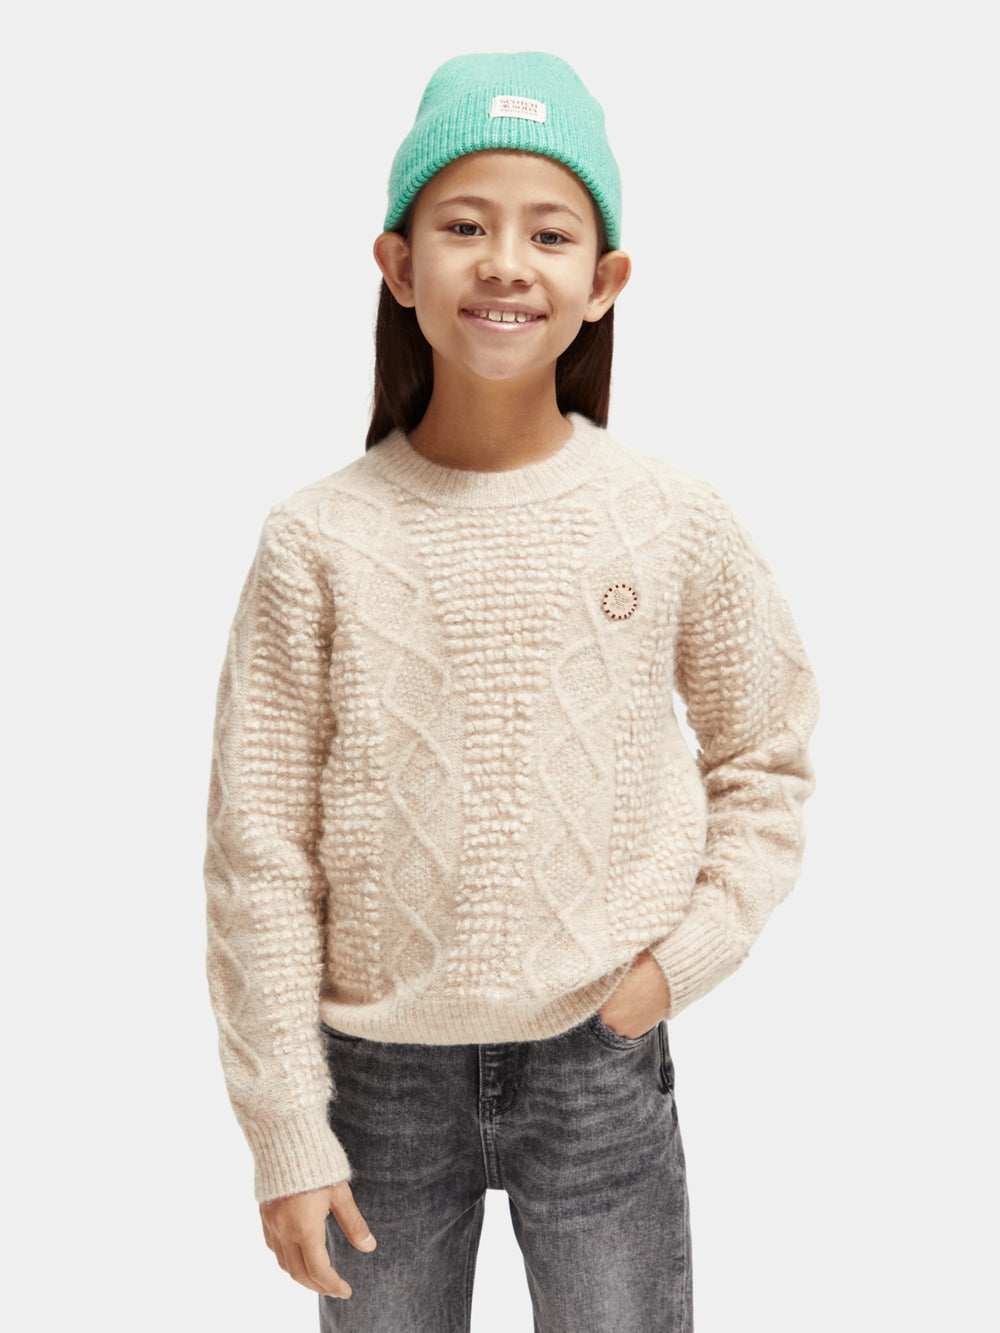 Kids - Cable knit pullover - Scotch & Soda NZ